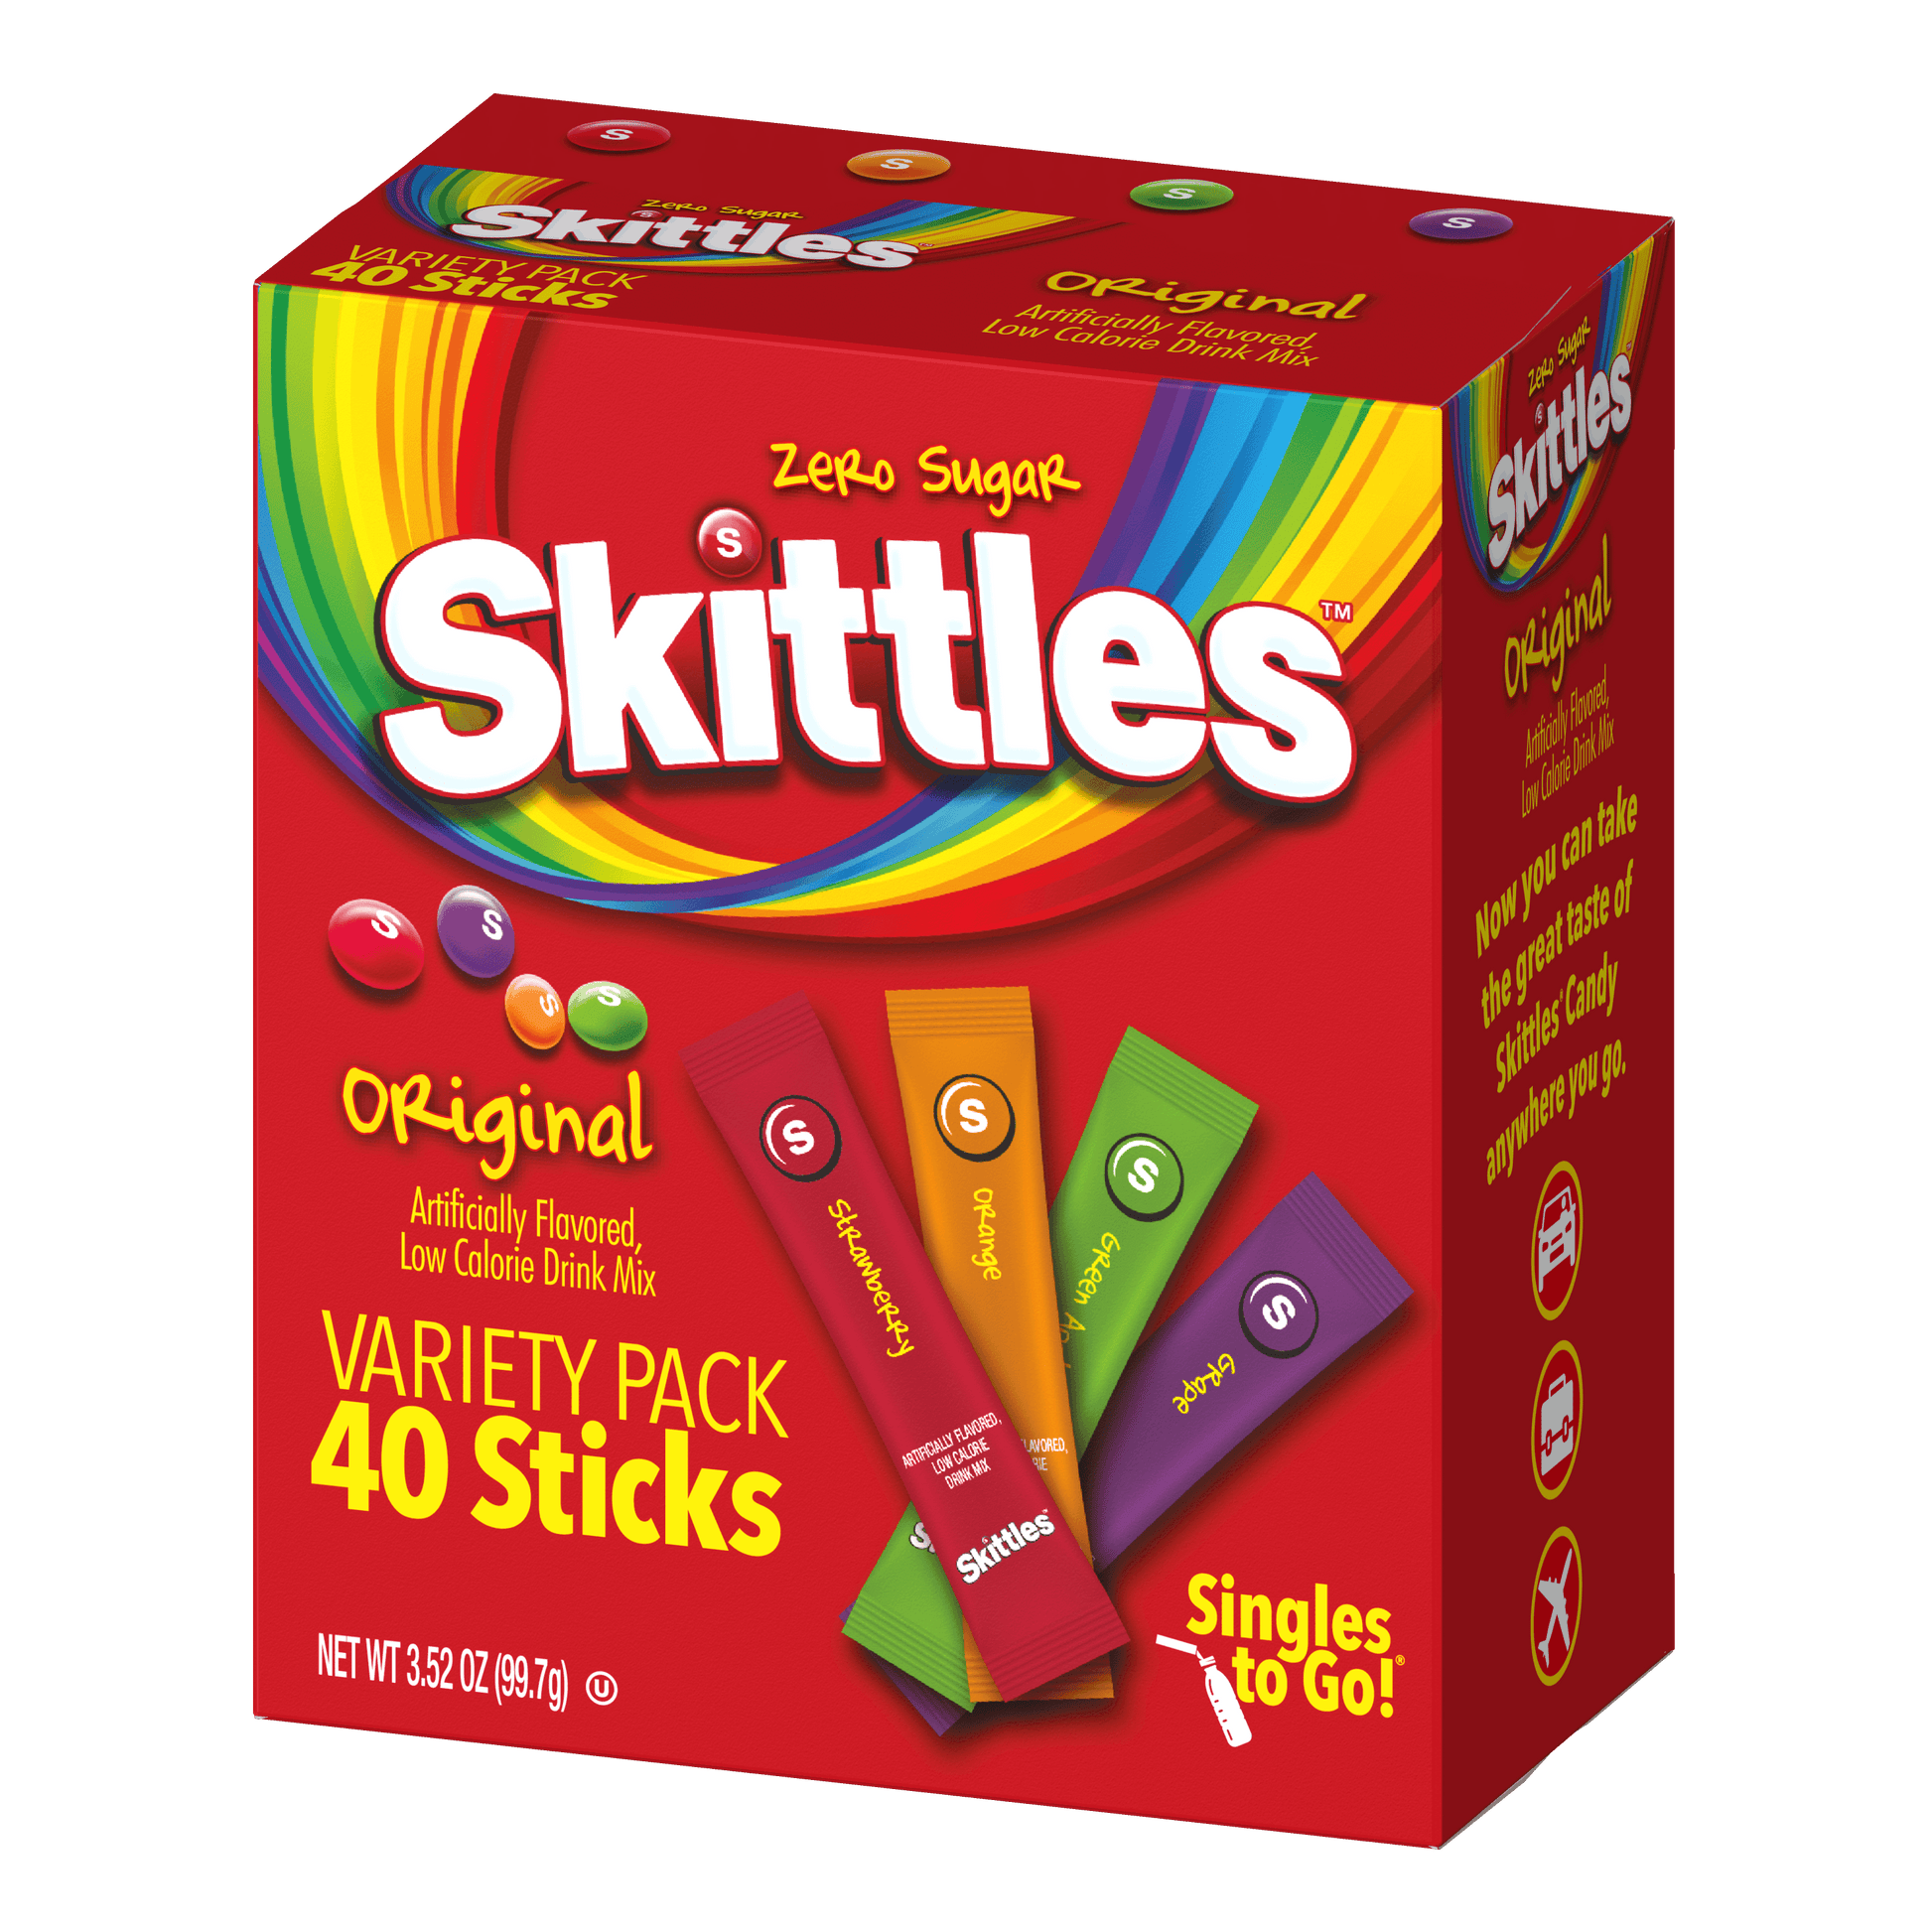 Skittles original flavor 40 count singles to go packaging